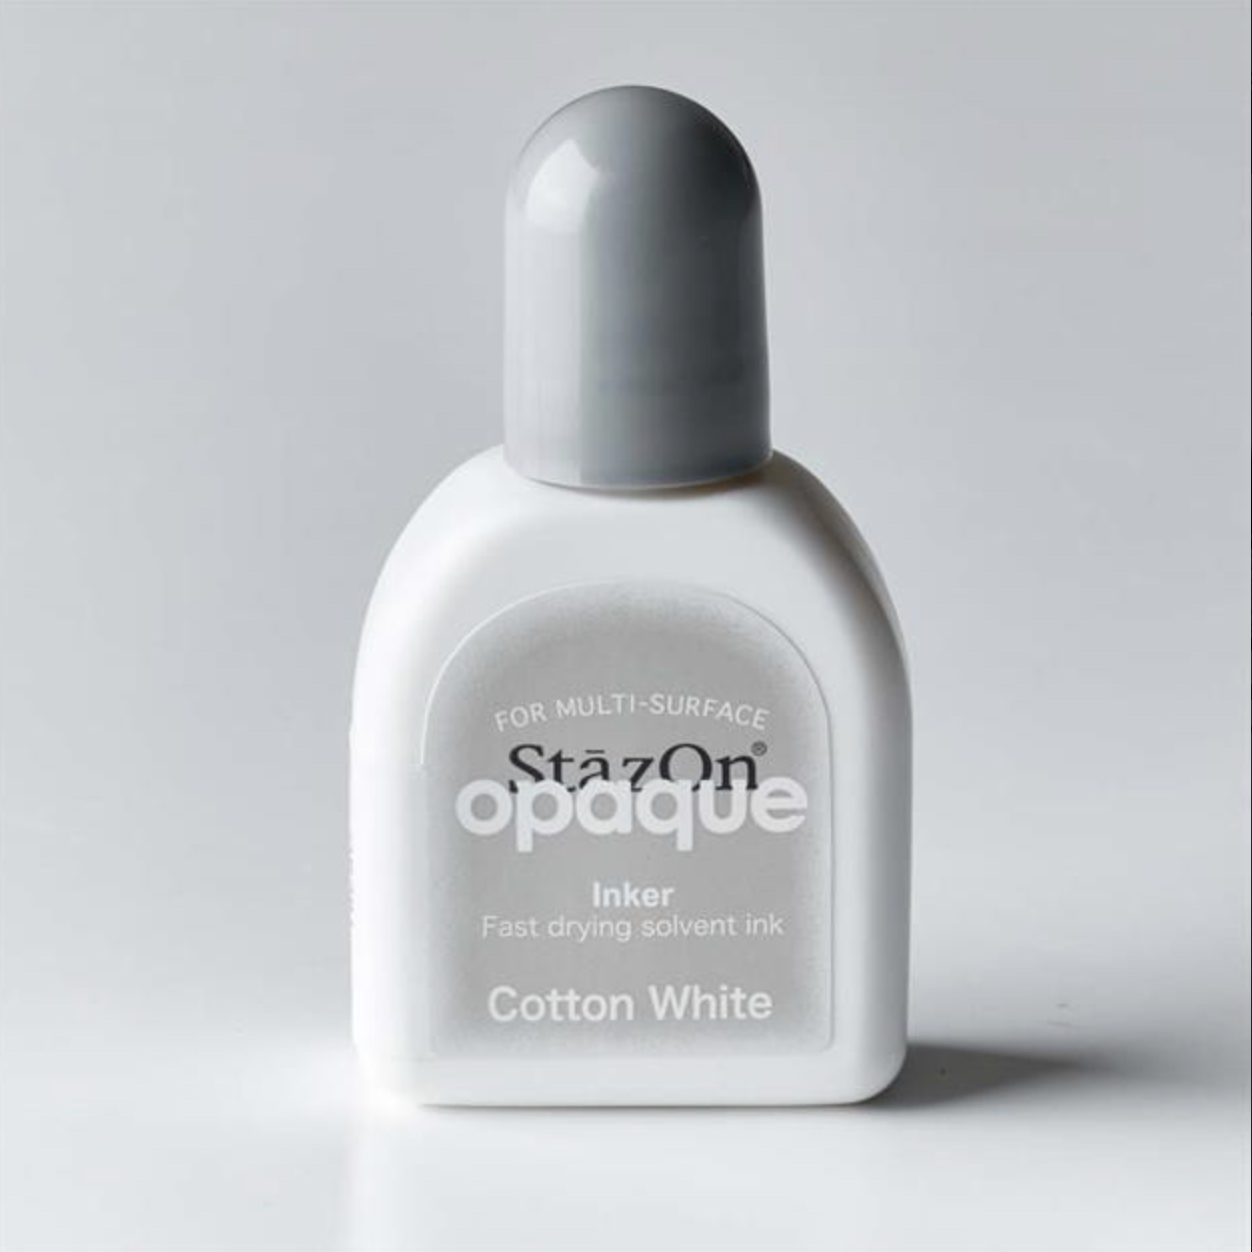 StazOn Opaque Solvent Refill 15ml Cotton White